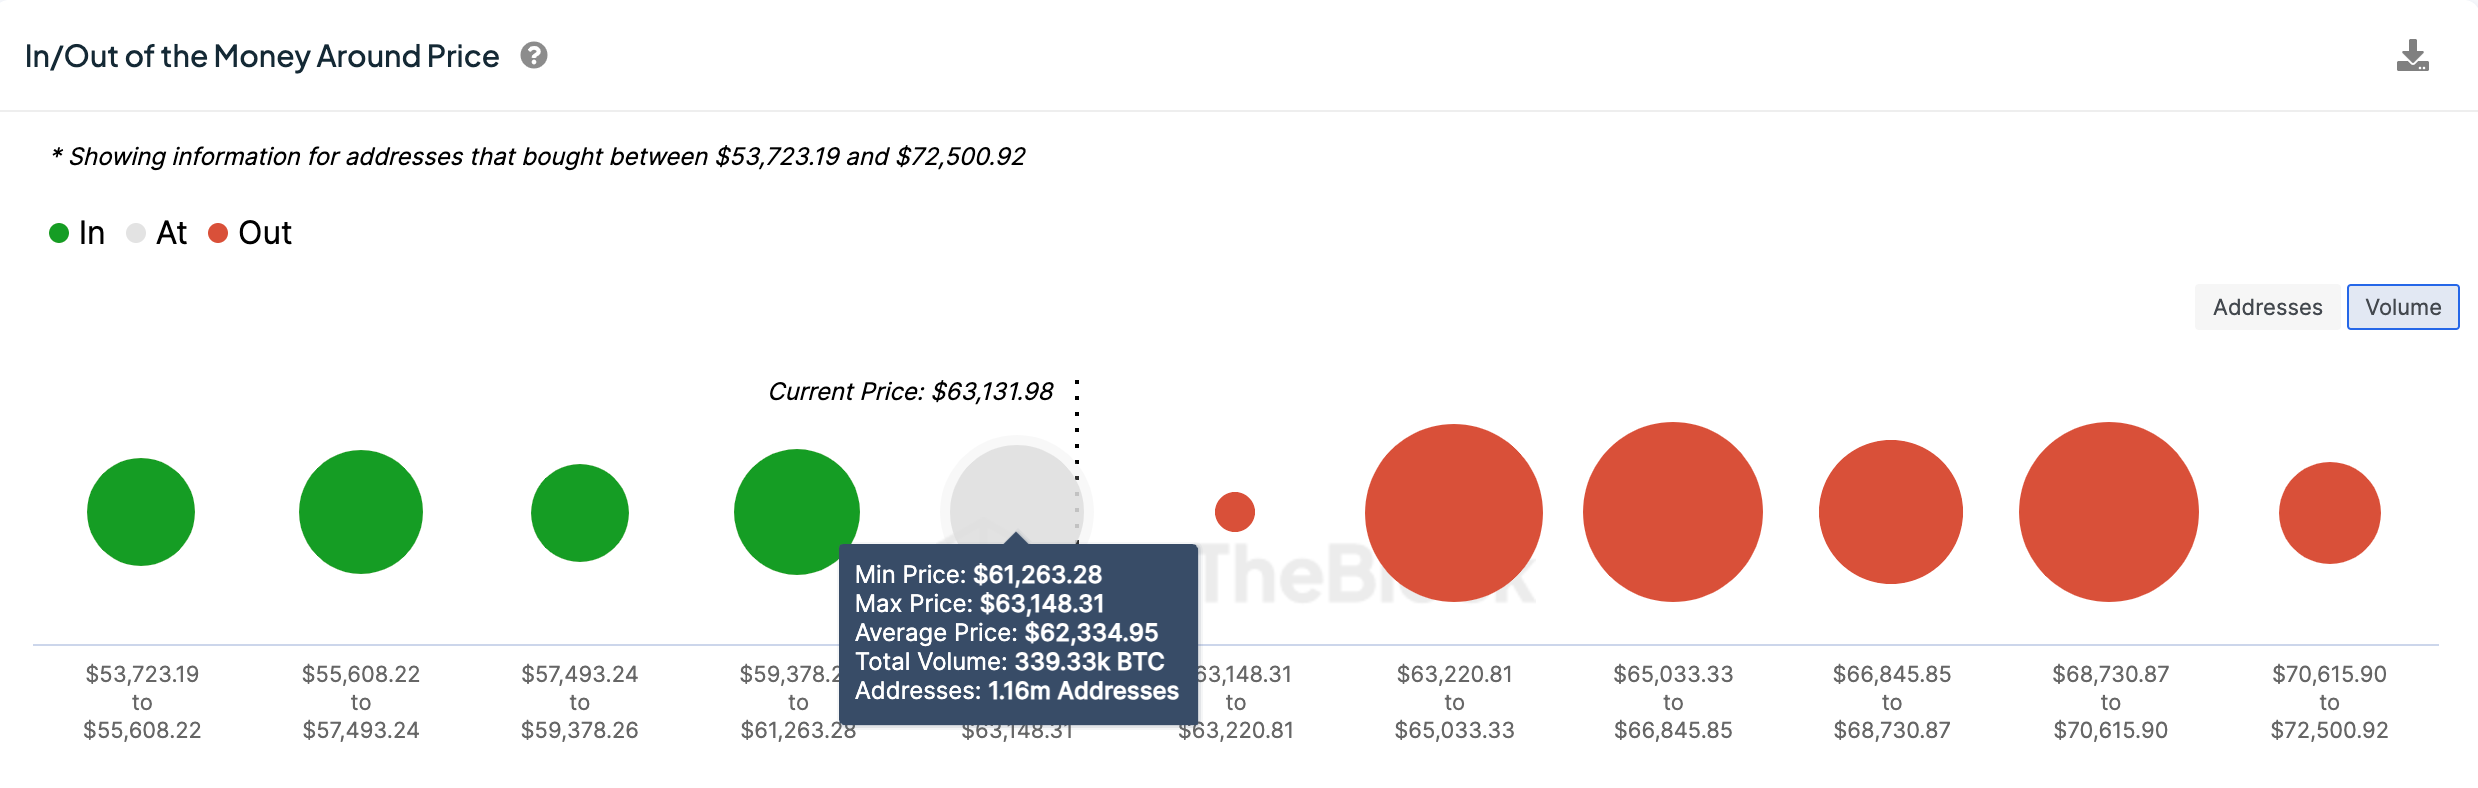 Bitcoin (BTC) Price Forecast | Source: IntoTheBlock